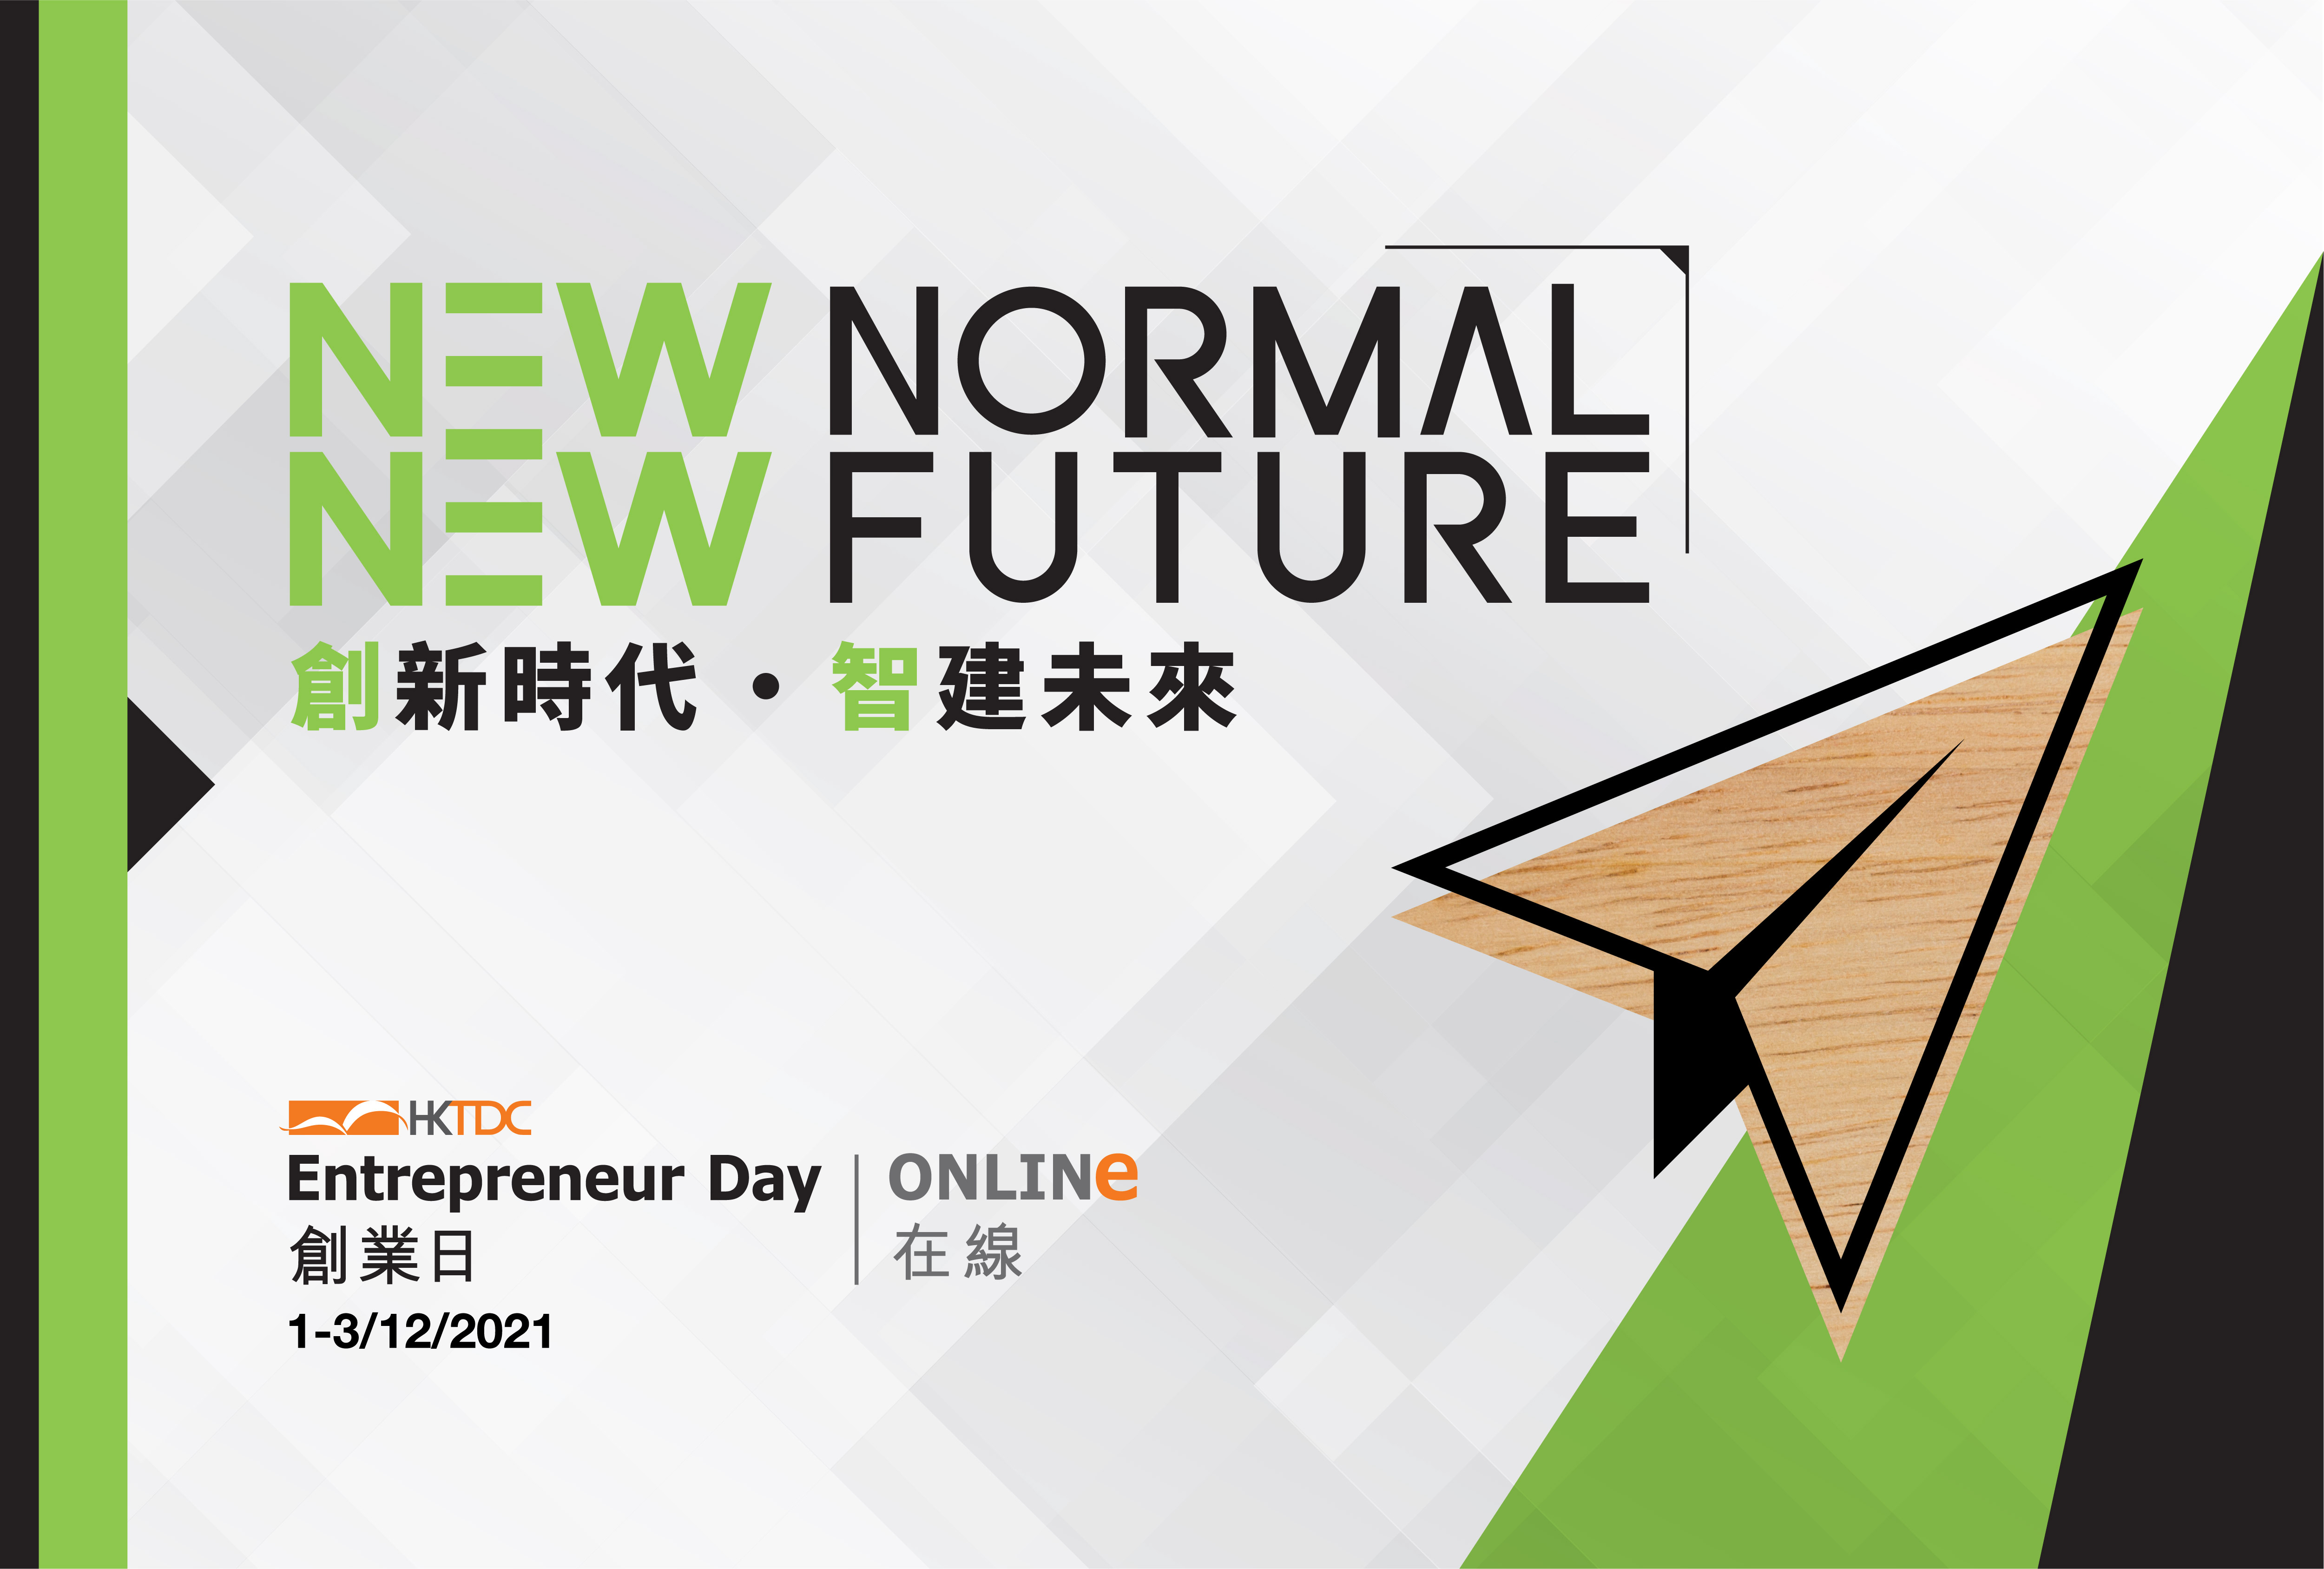 Supporting Event - HKTDC Entrepreneur Day ONLINE